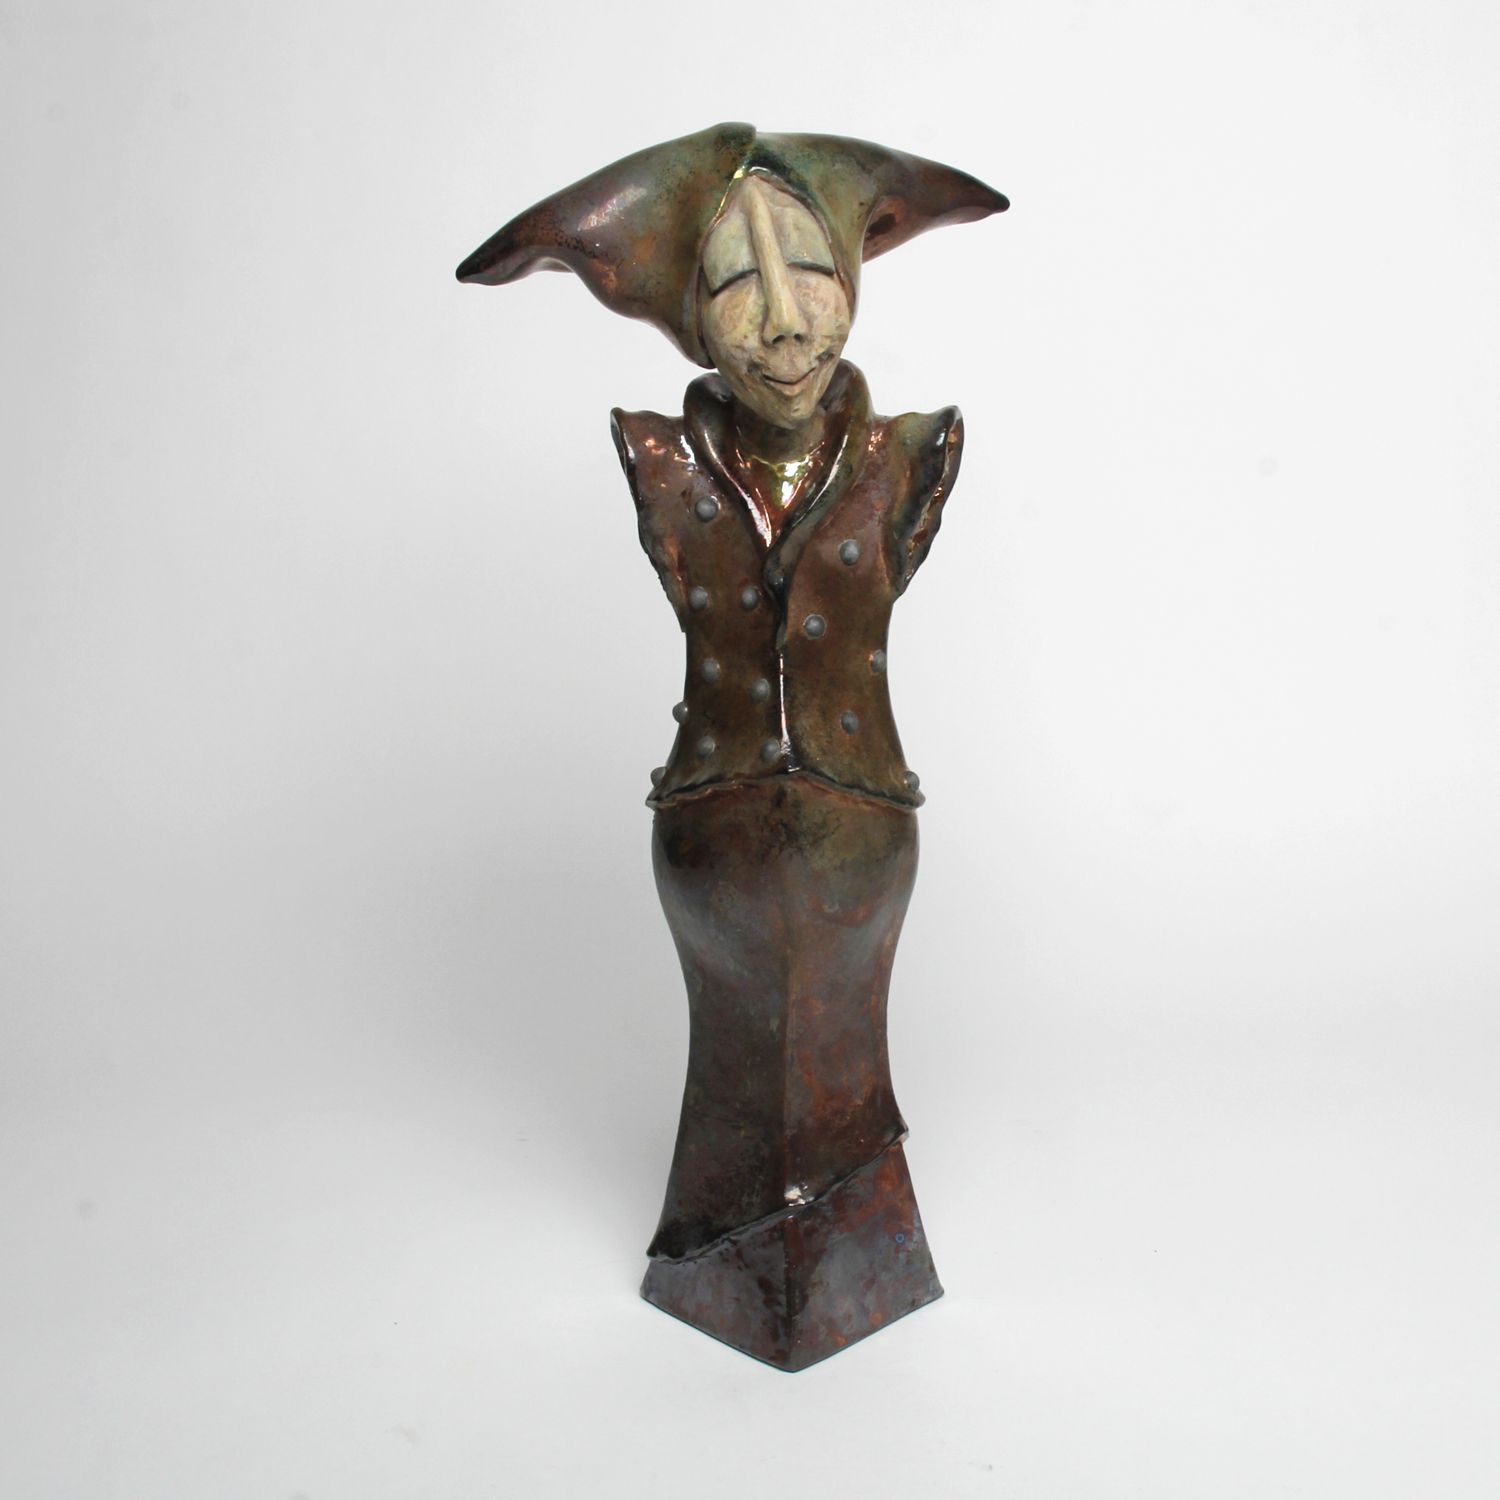 Zsuzsa Monostory: Tall Jester Figure Product Image 1 of 4